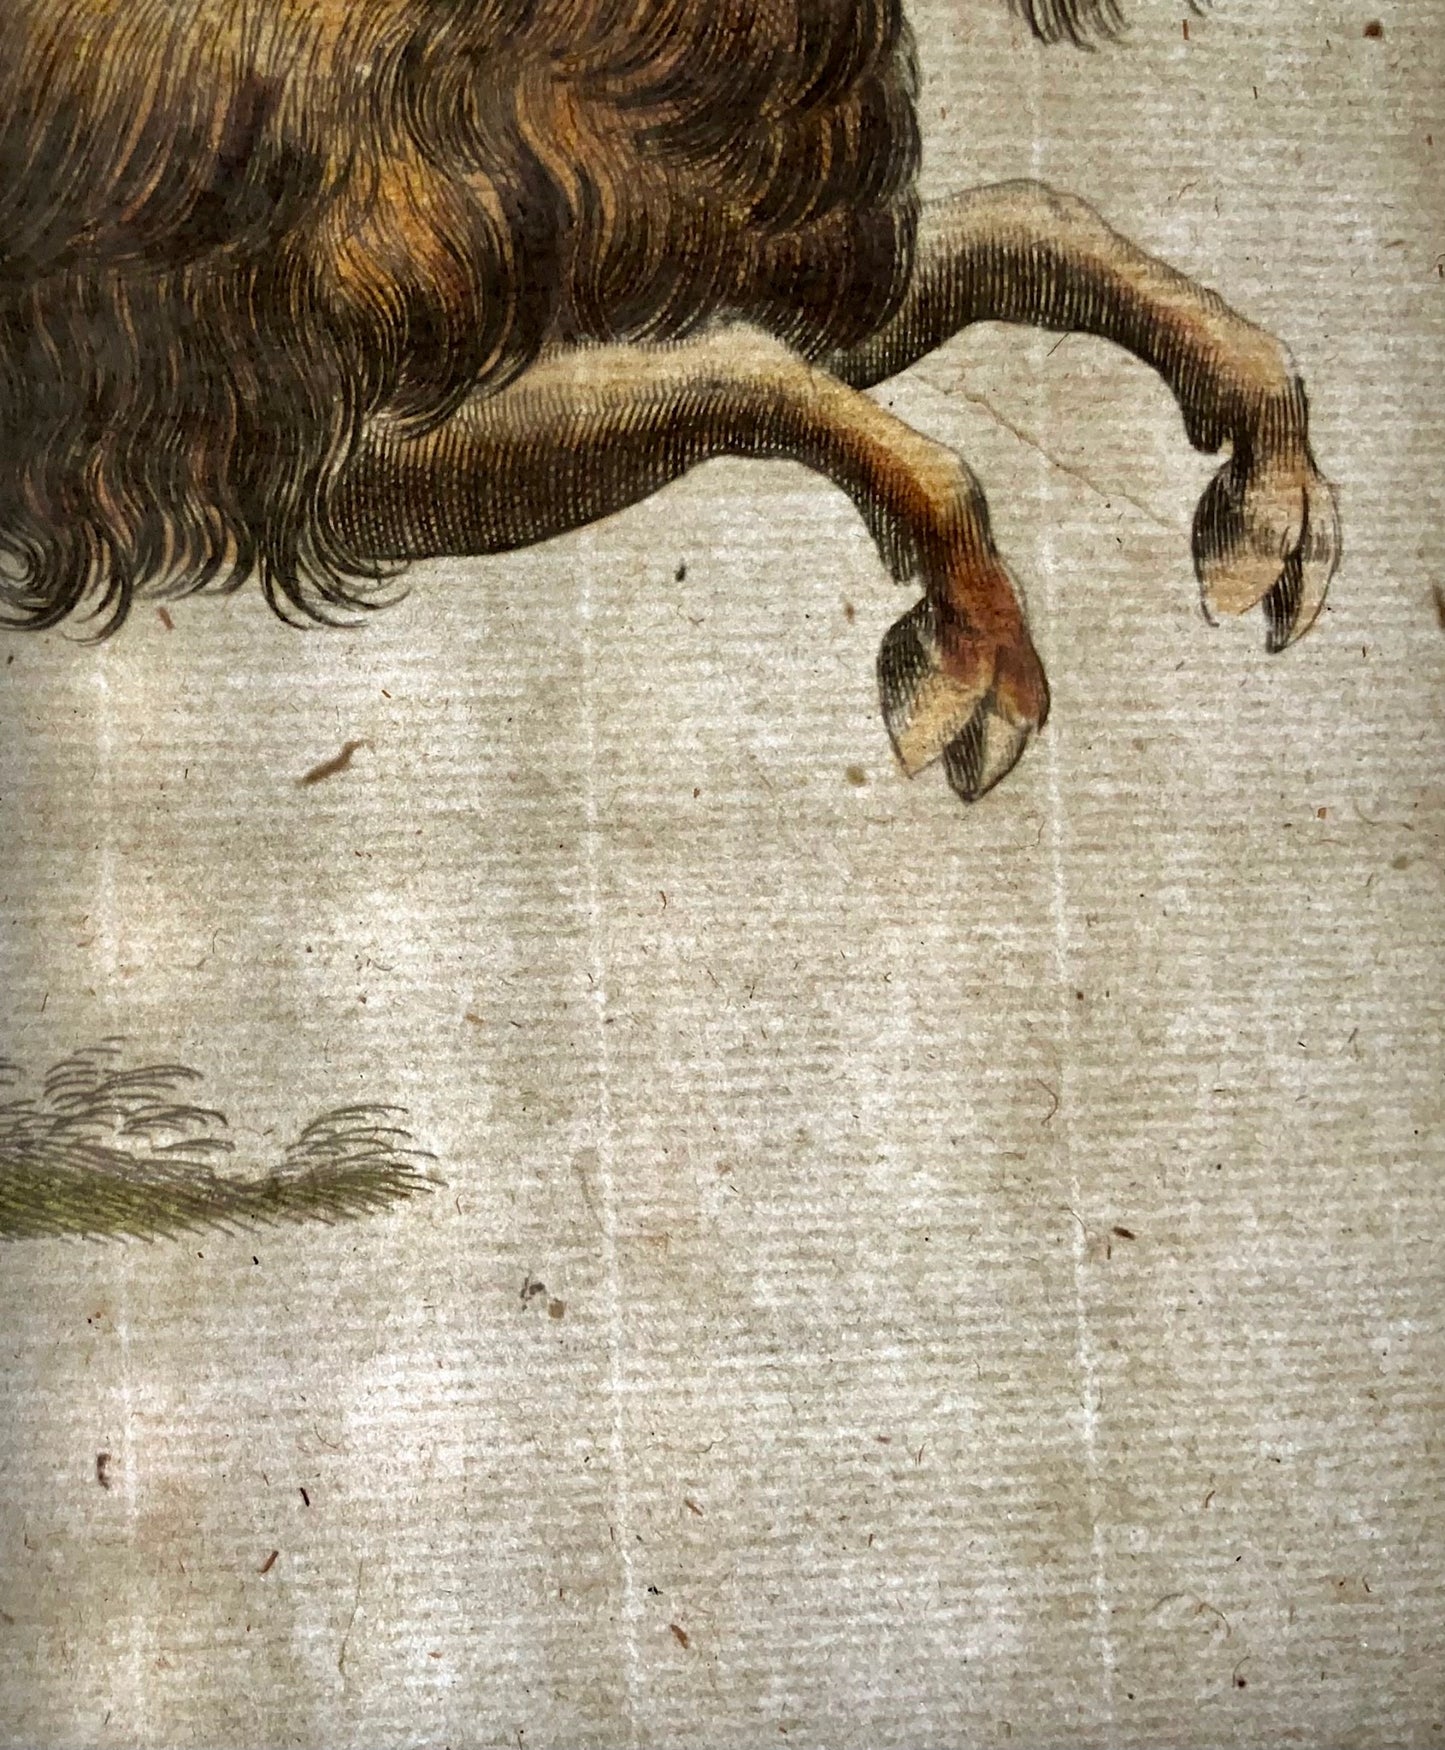 1657 Ibex, Mouflon, Goats, Matt. Merian, folio, hand coloured engraving, mammals